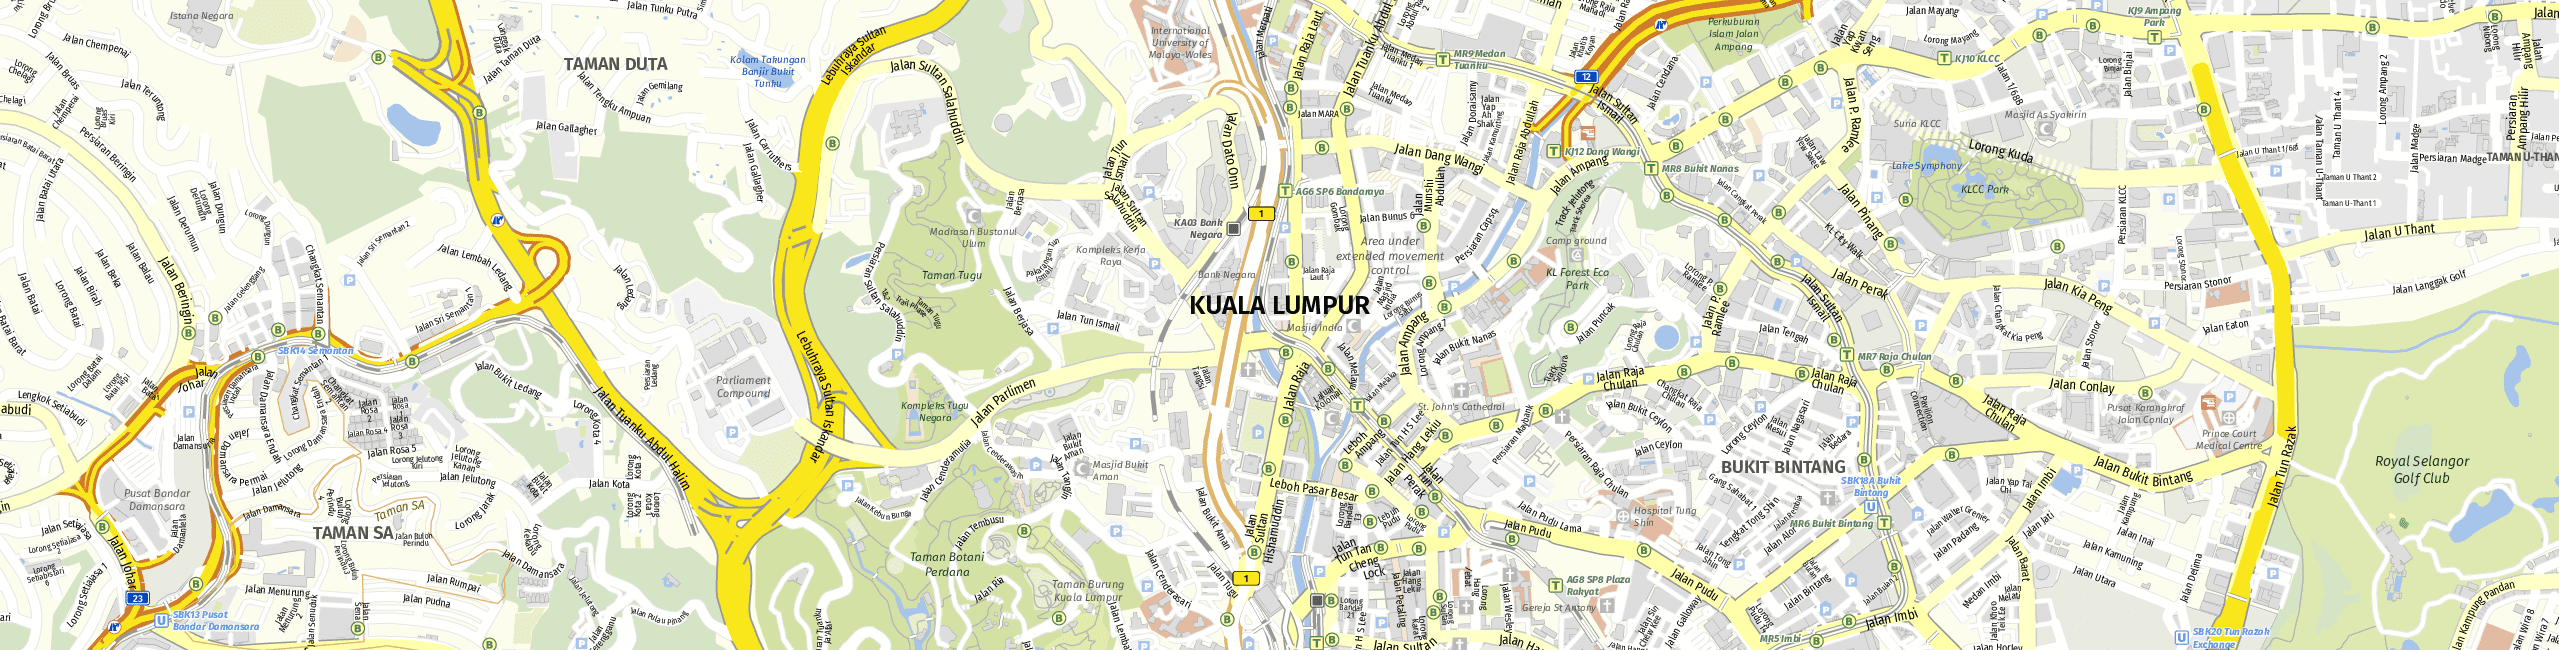 Stadtplan Kuala Lumpur zum Downloaden.